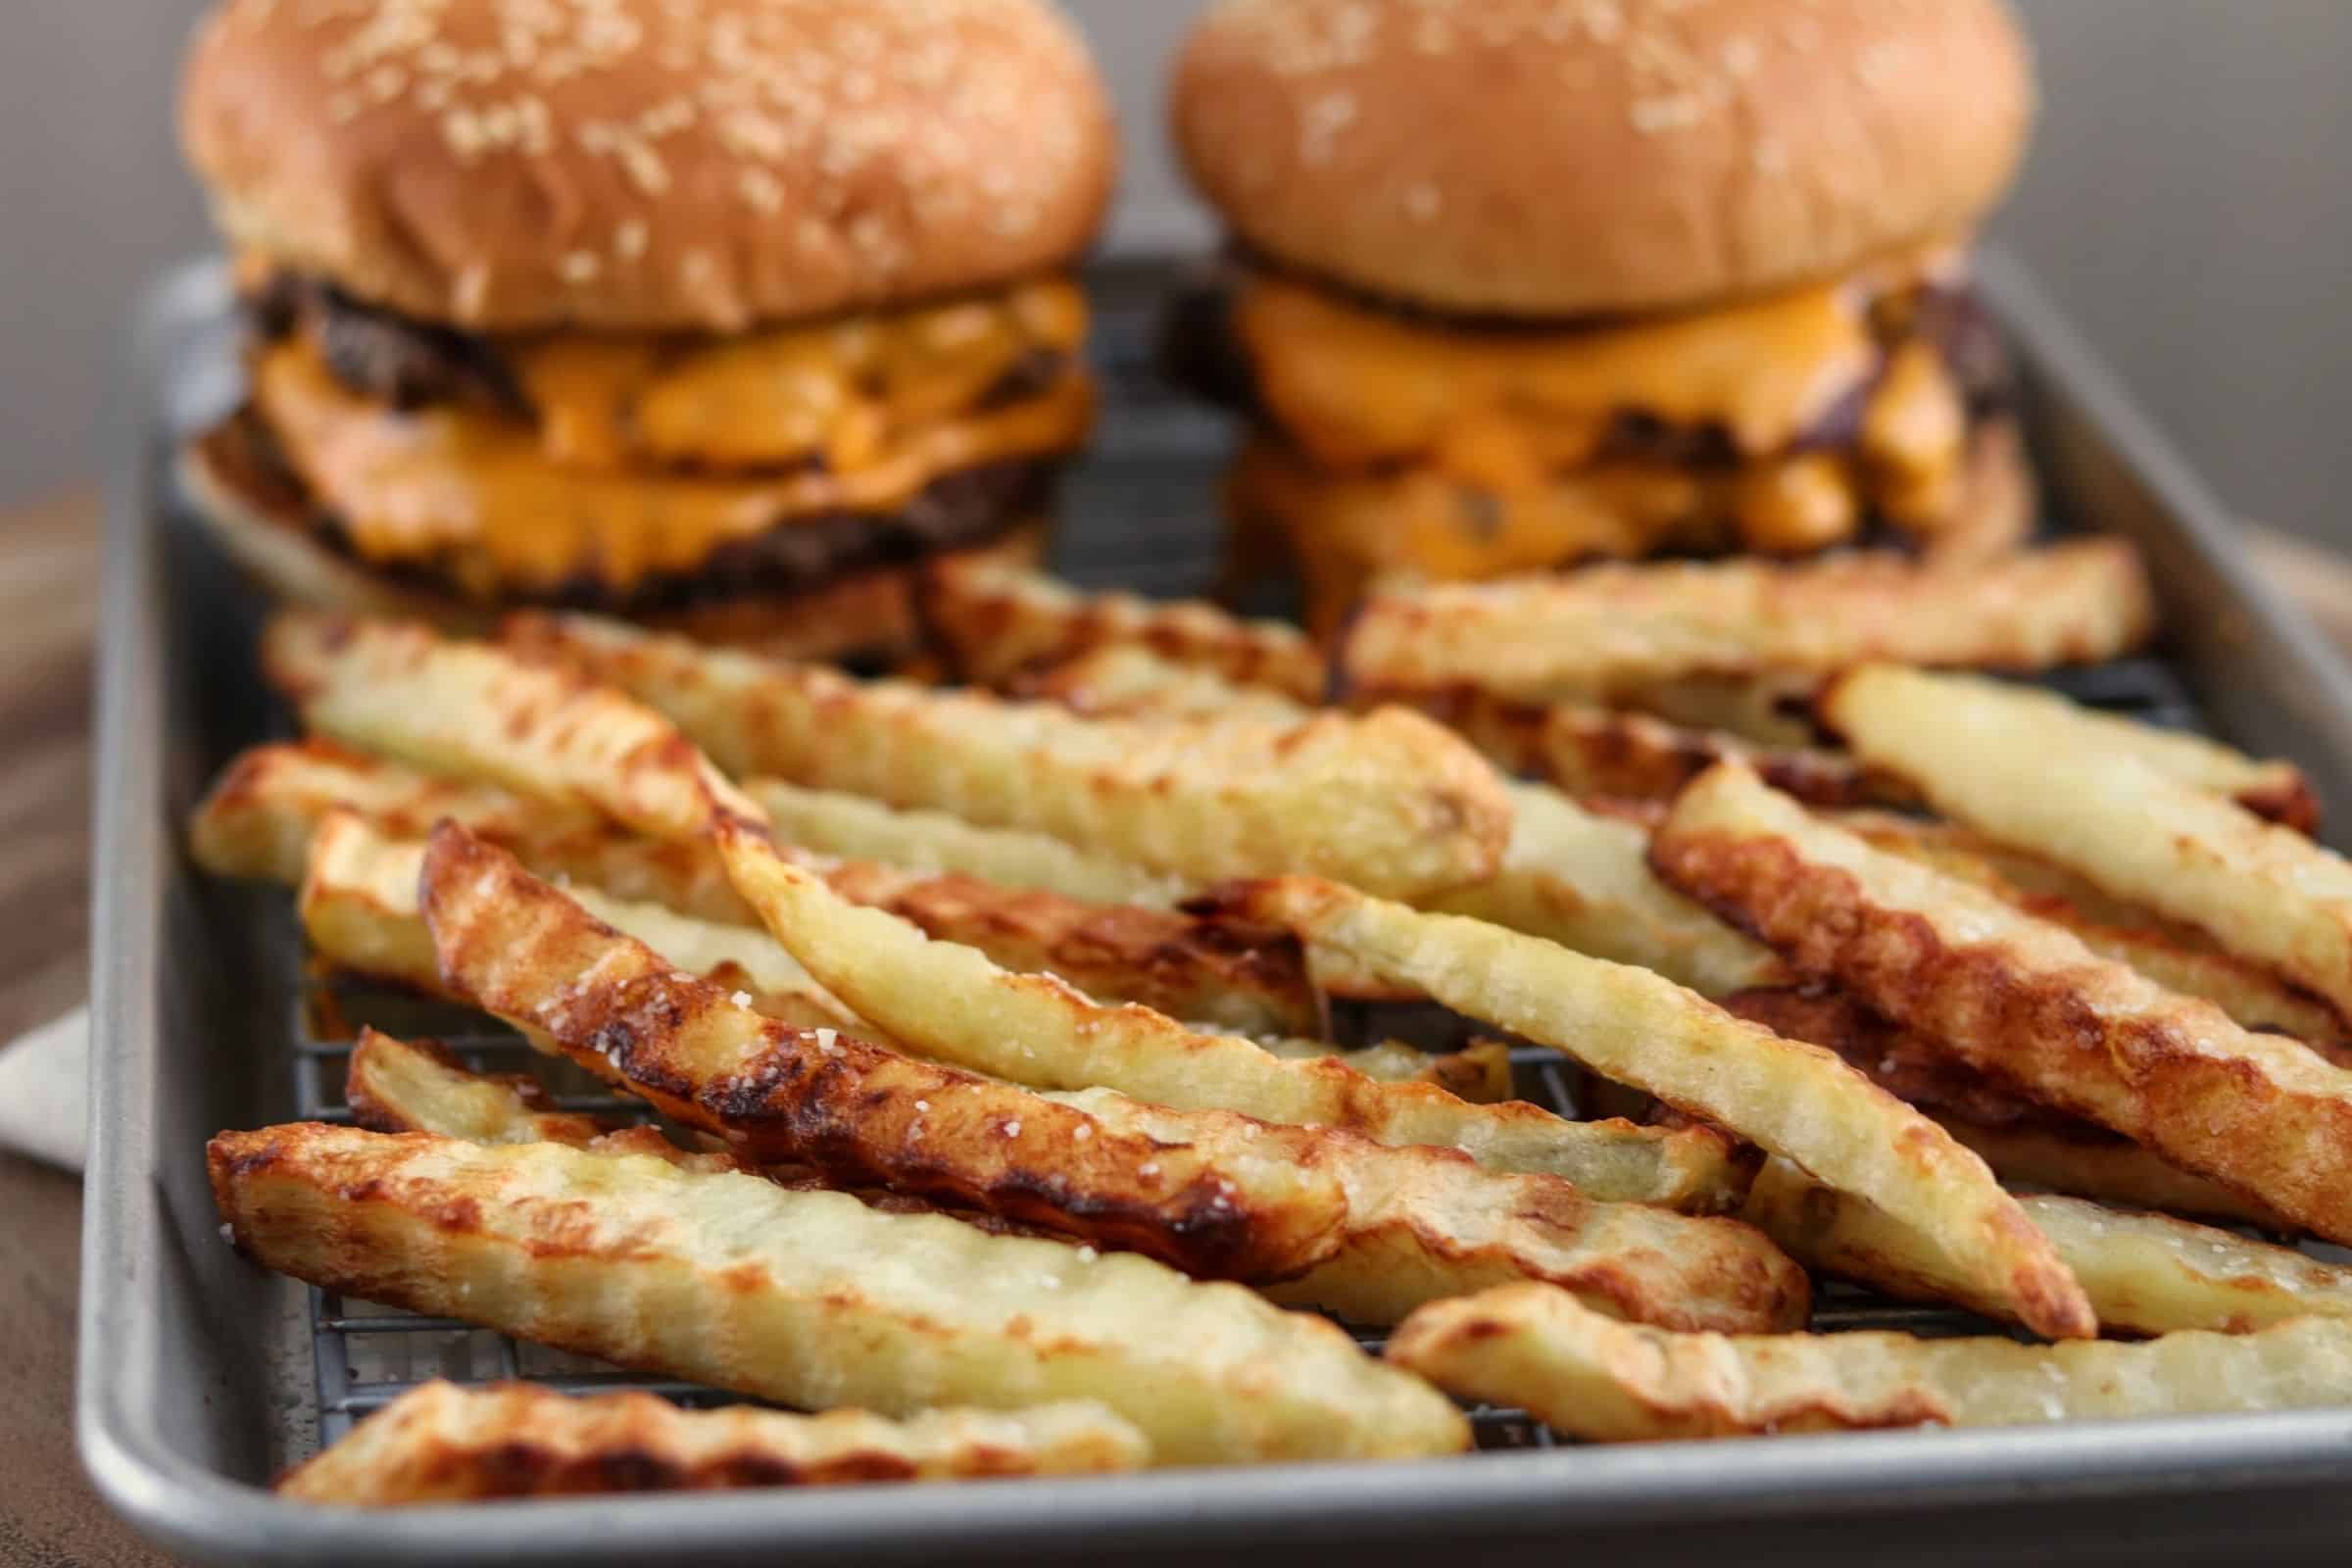 https://masonfit.com/wp-content/uploads/2020/10/air-fryer-crinkle-cut-fries-featured-image.jpg